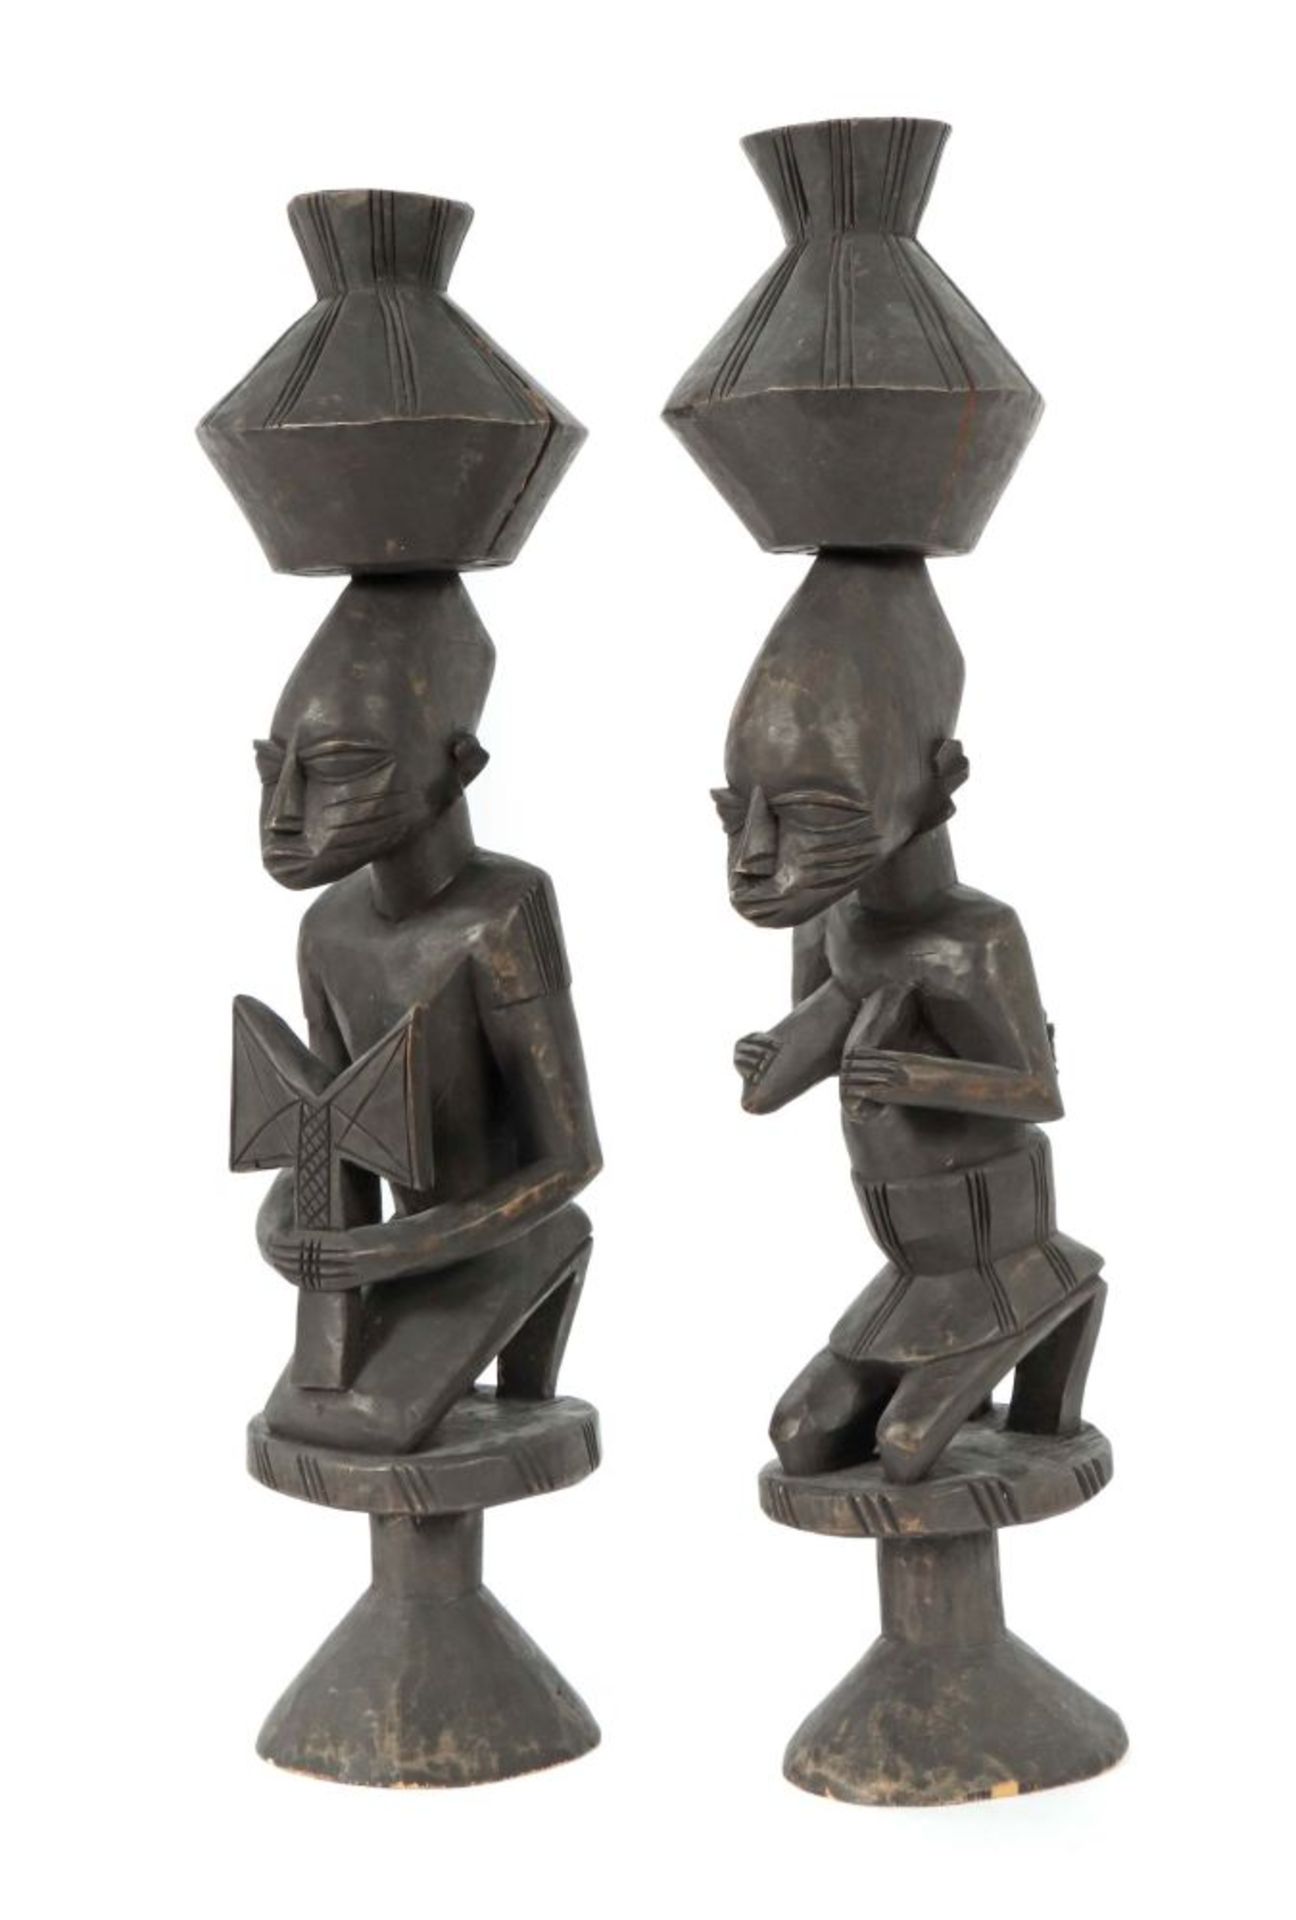 Yoruba Figuren-Paar Nigeria, Holz